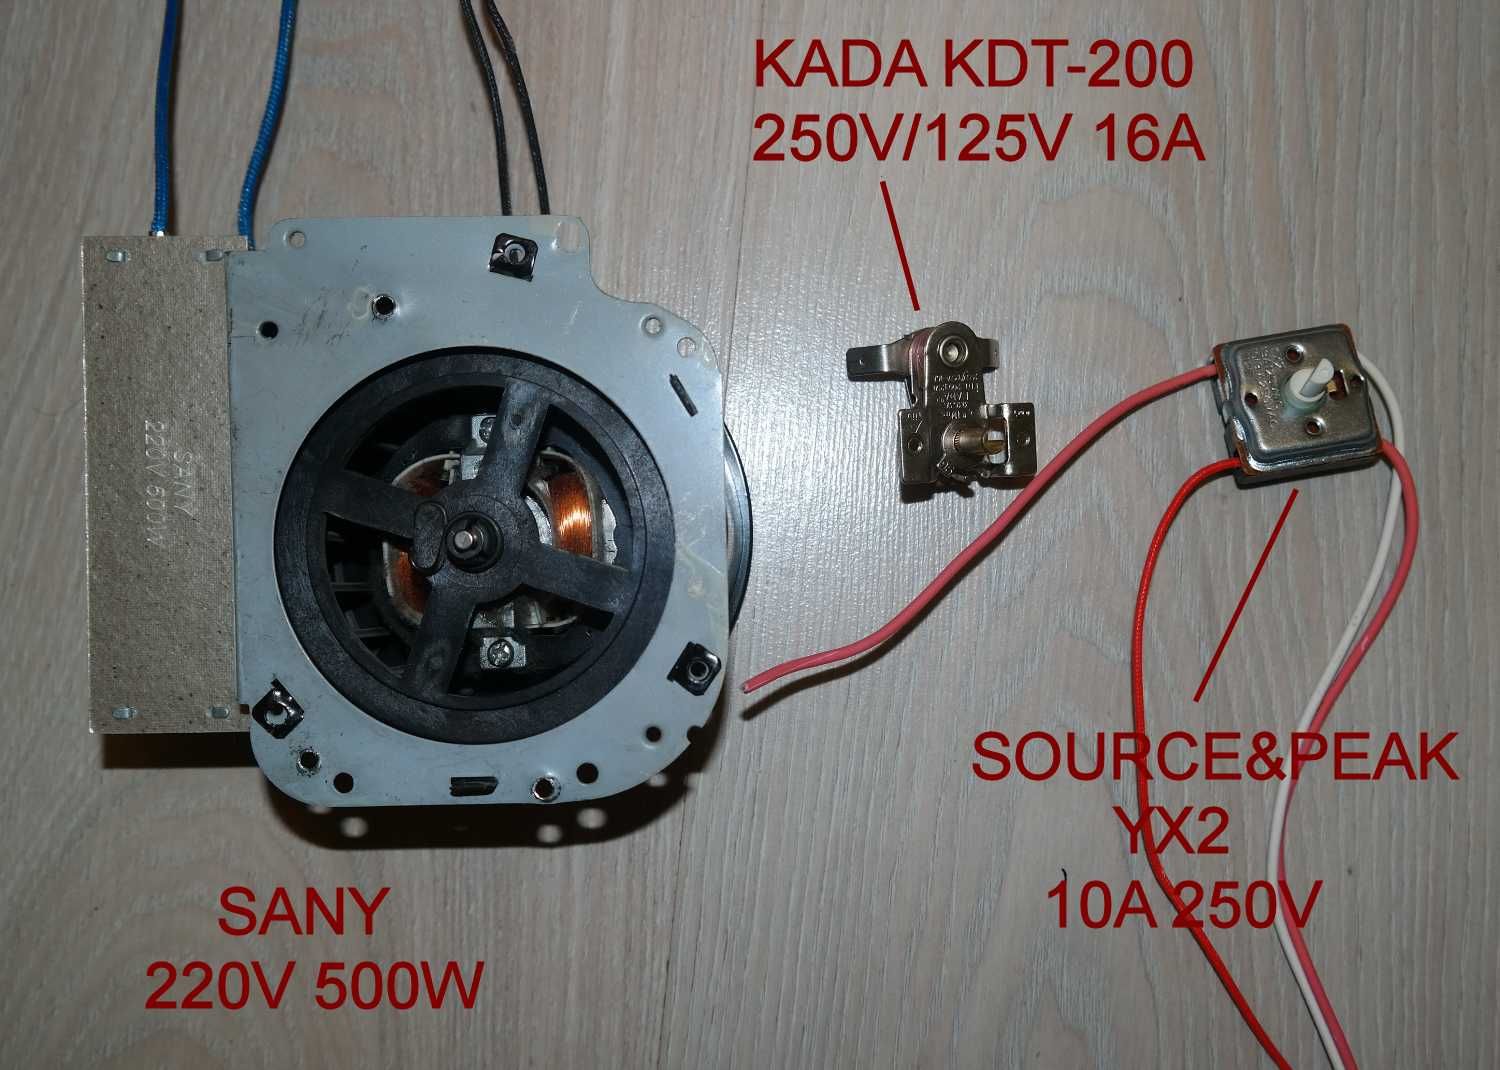 Запчасти для обогревателя KADA KDT-200 SOURCE&PEAK YX2 тепловентилятор